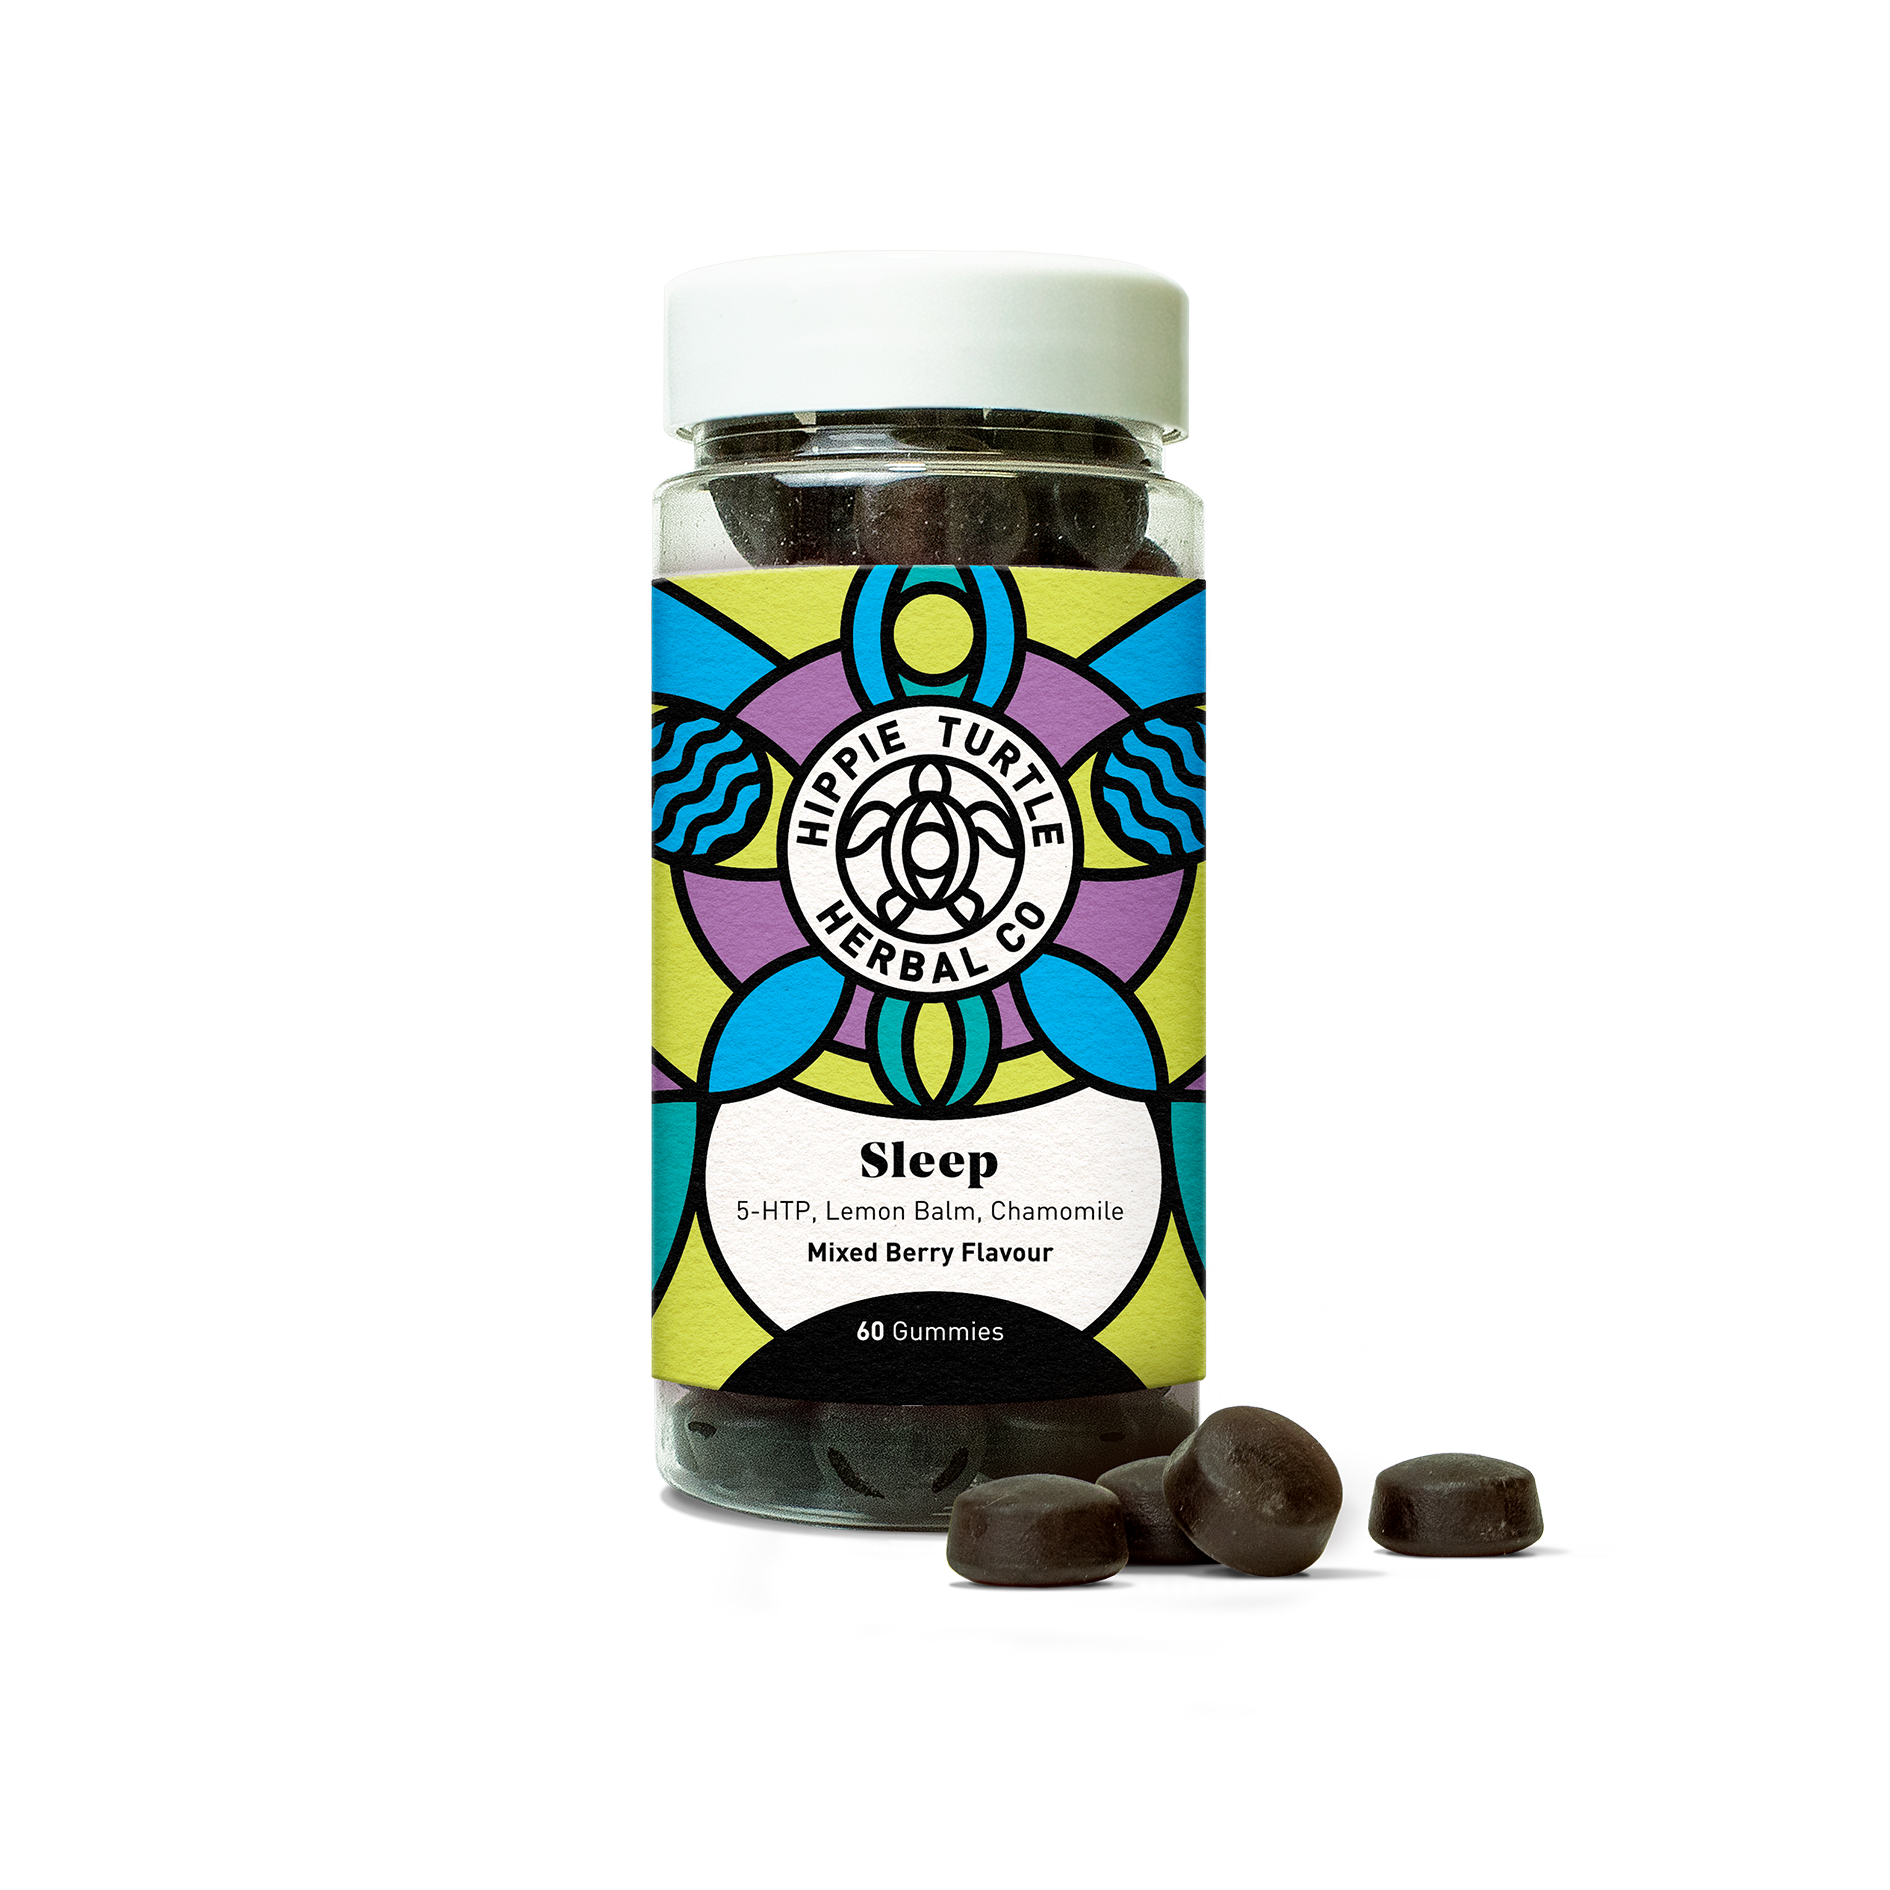 Hippie Turtle Herbal Co Sleep Gummies chewable supplement for sleep. With 5 htp, lemon balm, chamomile, zinc and vitamin b6